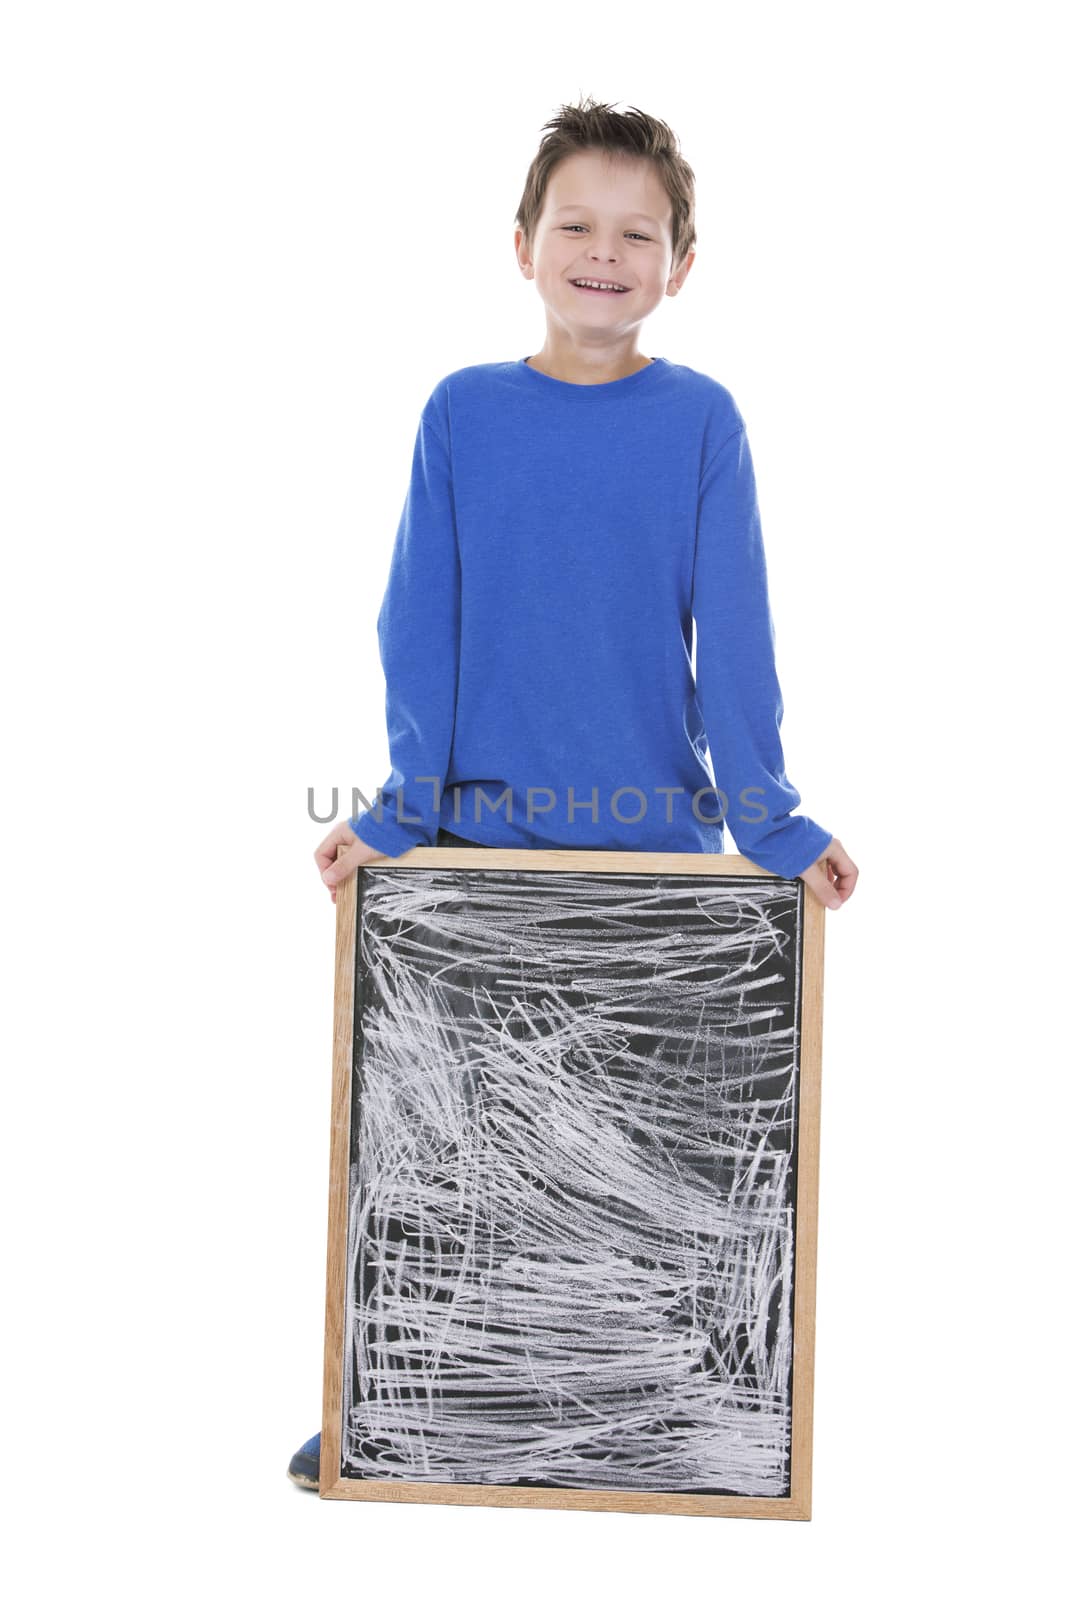 boy holding chalk board by zdenkadarula